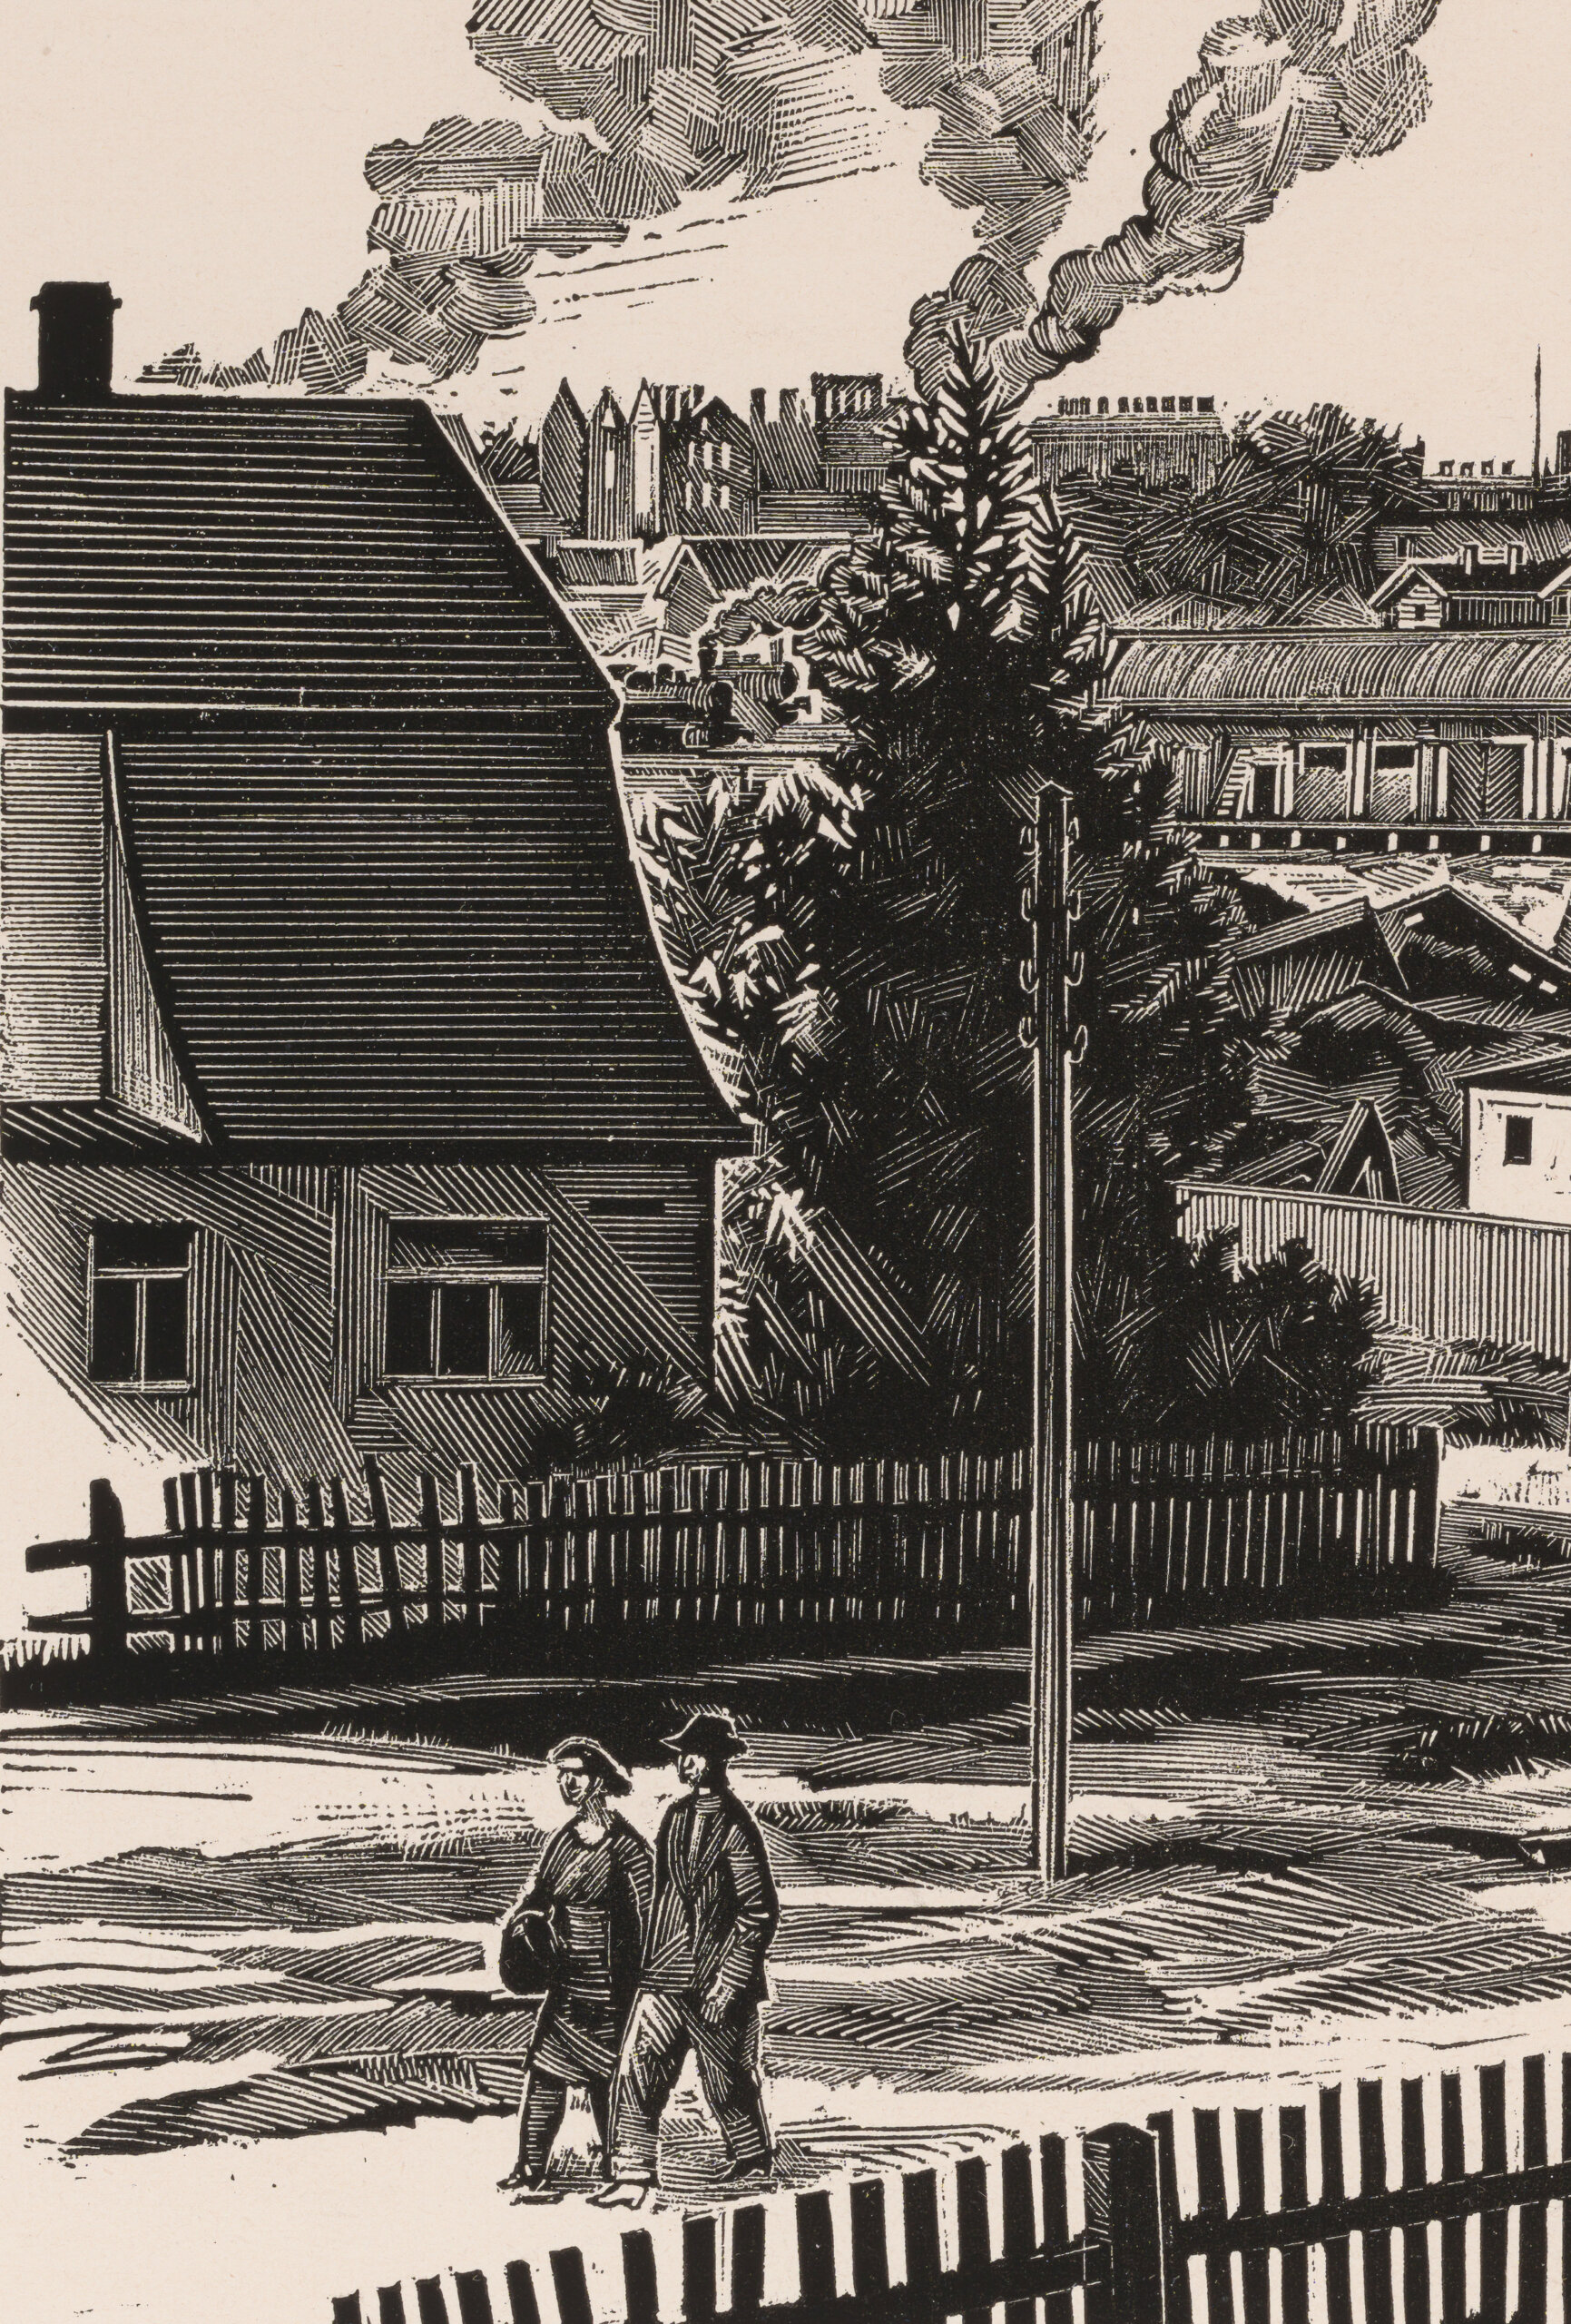 Richard Kaljo “Tartu viljasilo”, 1945. Plm 18,1 x 26,1 cm.